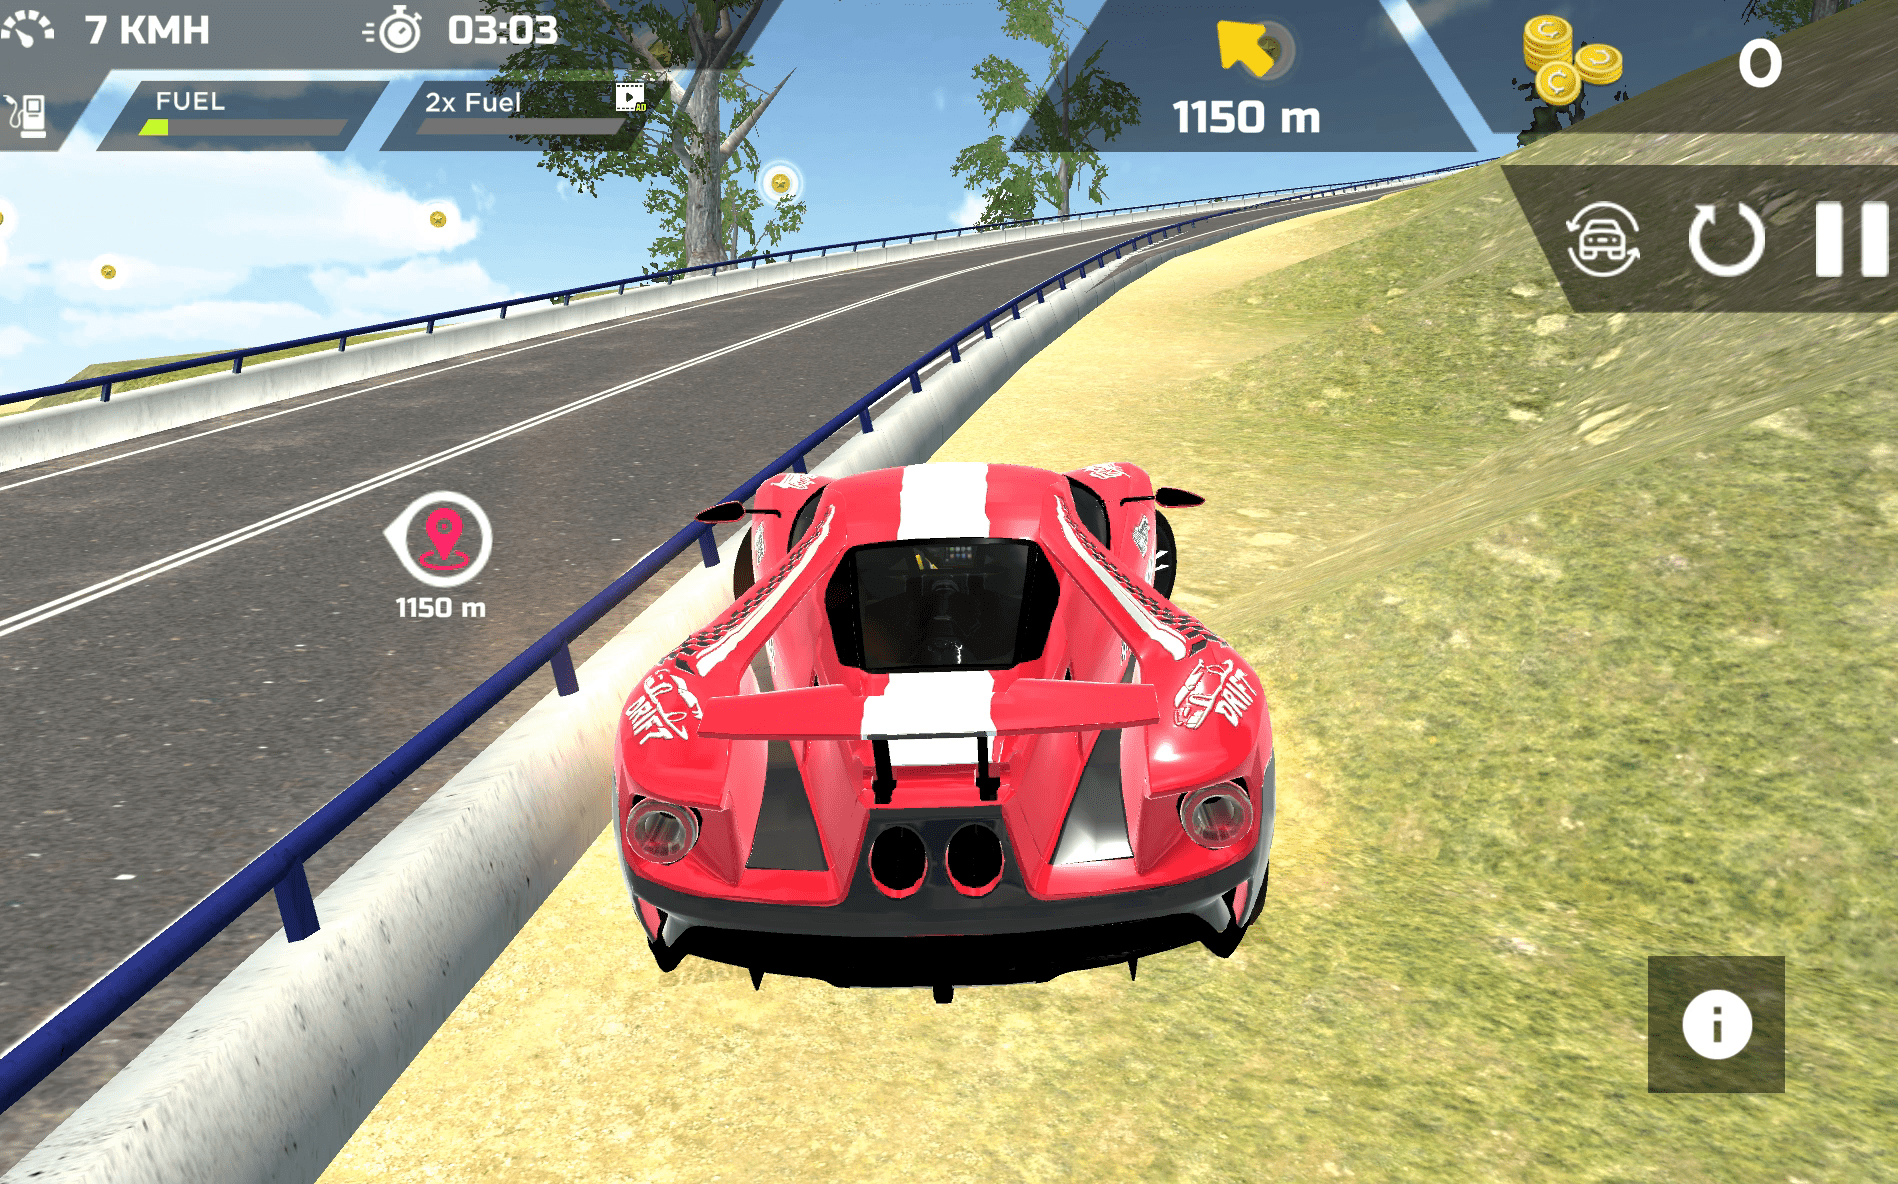 Real Sports Flying Car 3D Screenshot 6